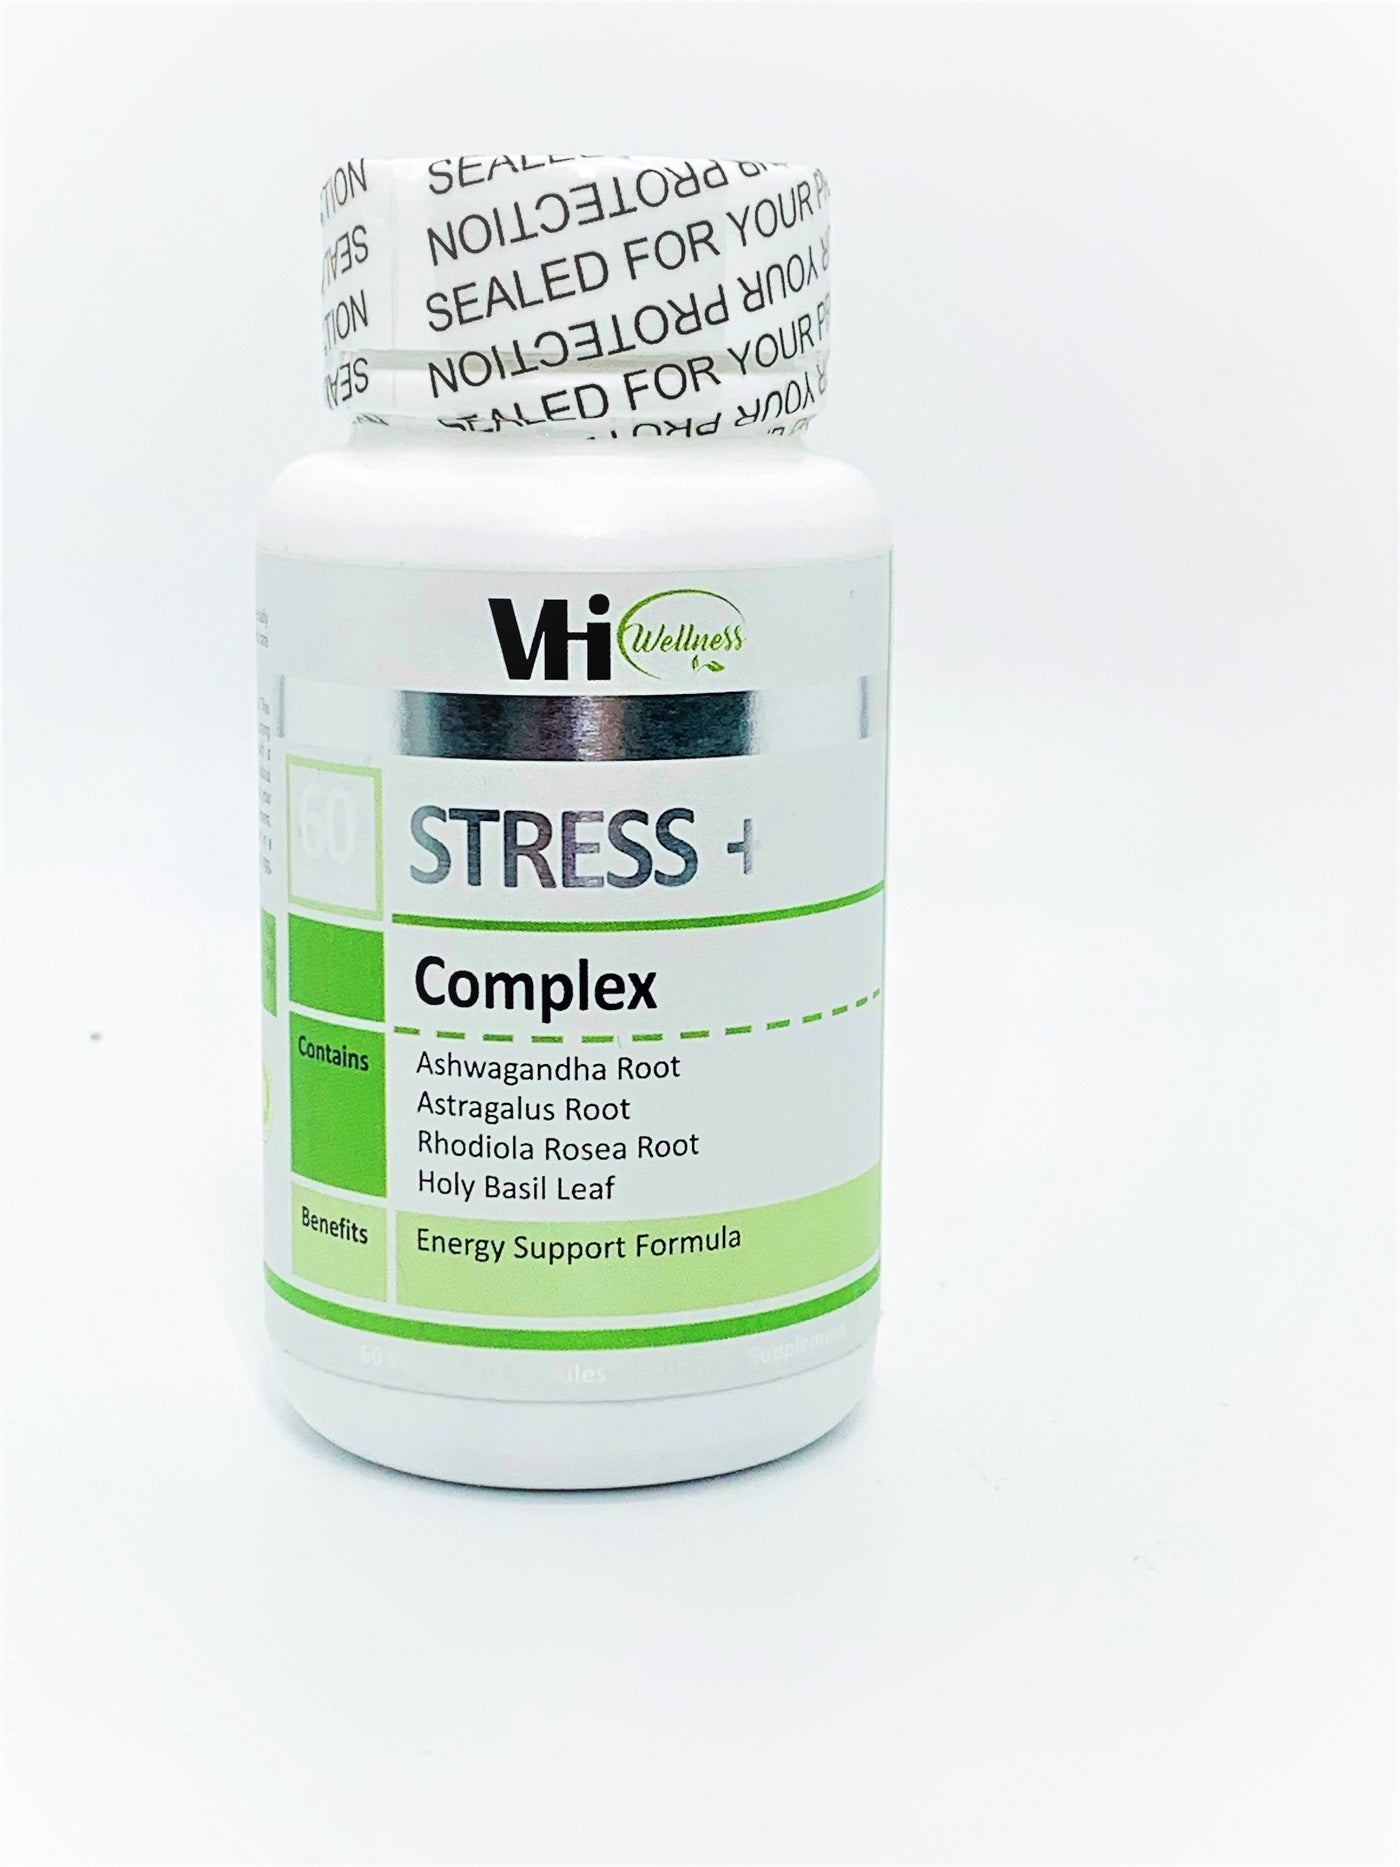 VHiFit | Stress+ VHiFit $24.95